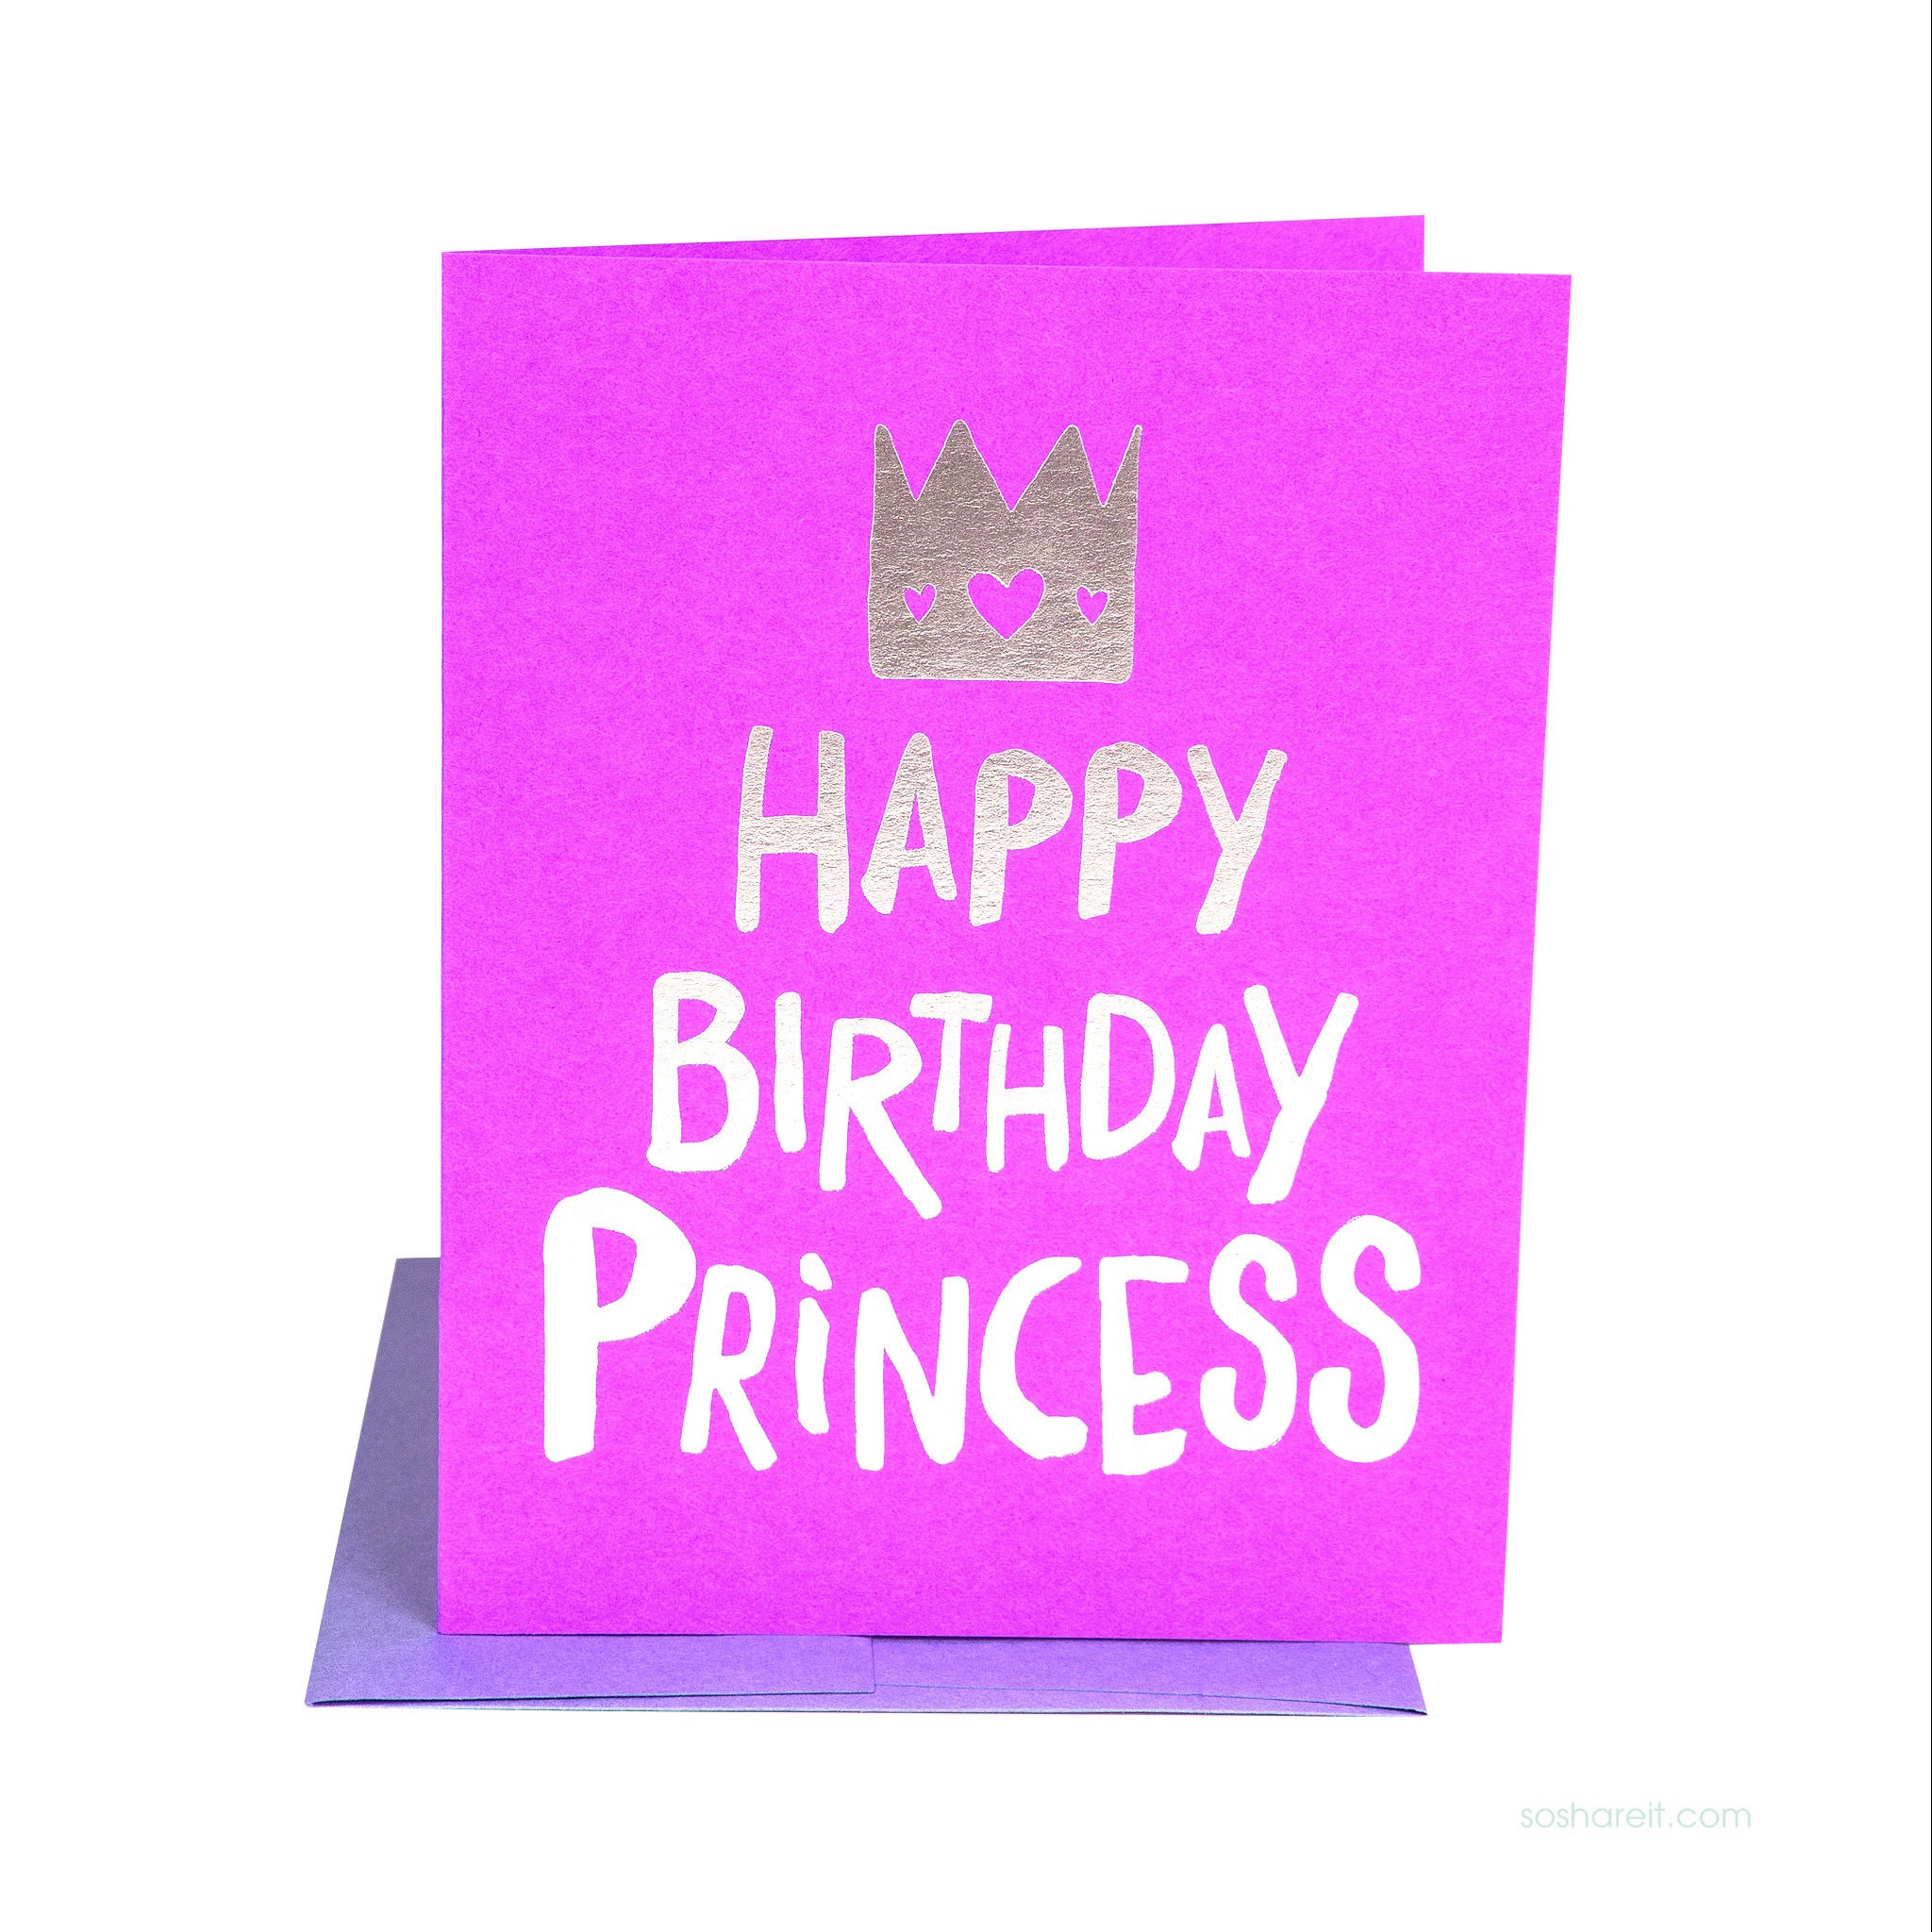 Happy Birthday Princess Quotes & Wallpaper